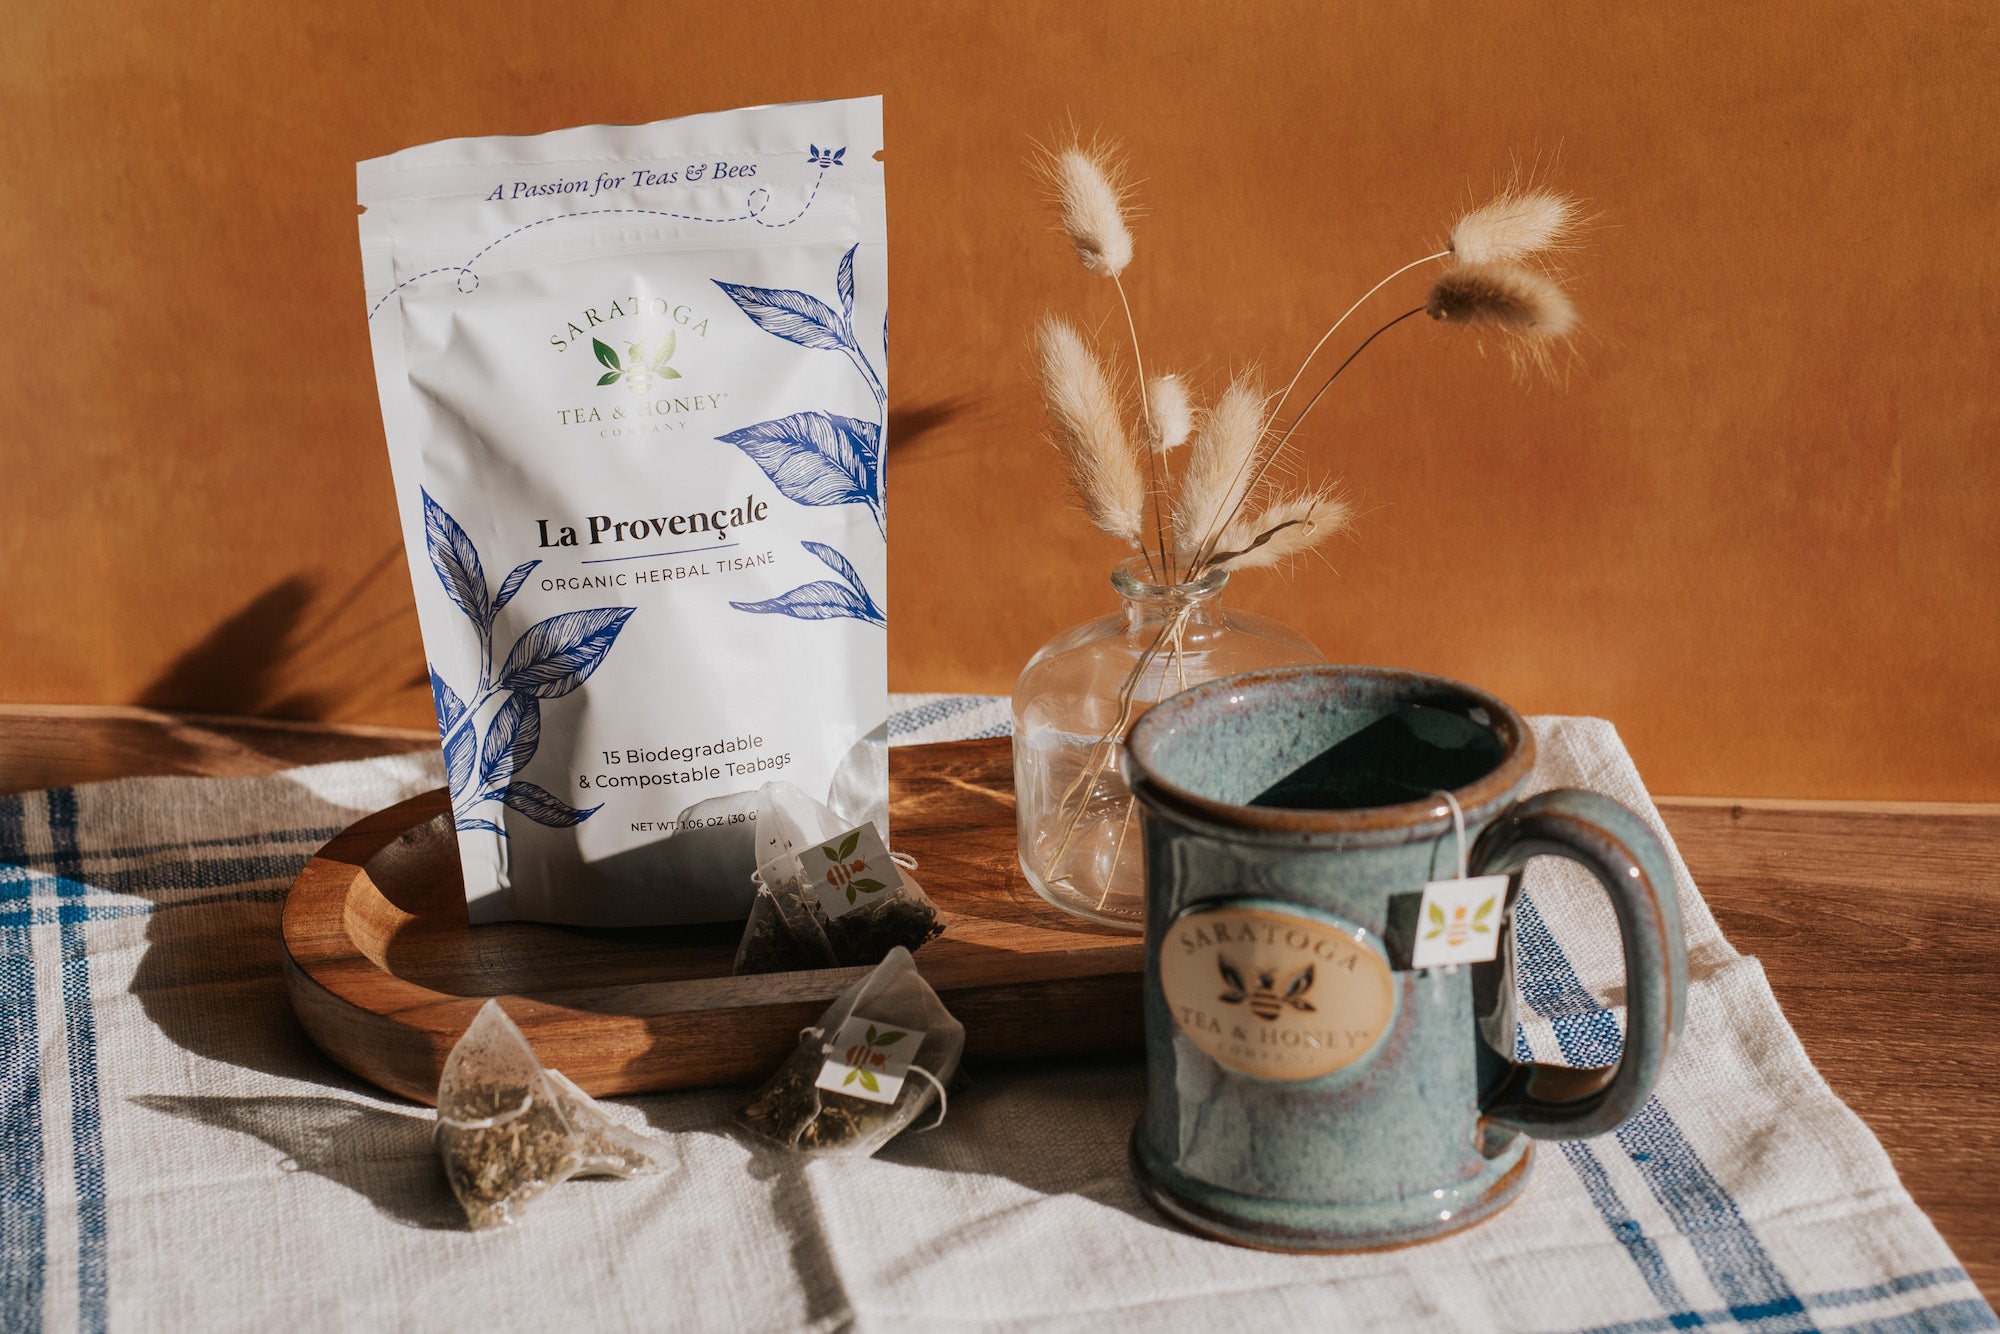 la provencale mint and lavender herbal tisane tea sachets next to a blue saratoga tea & honey co. mug